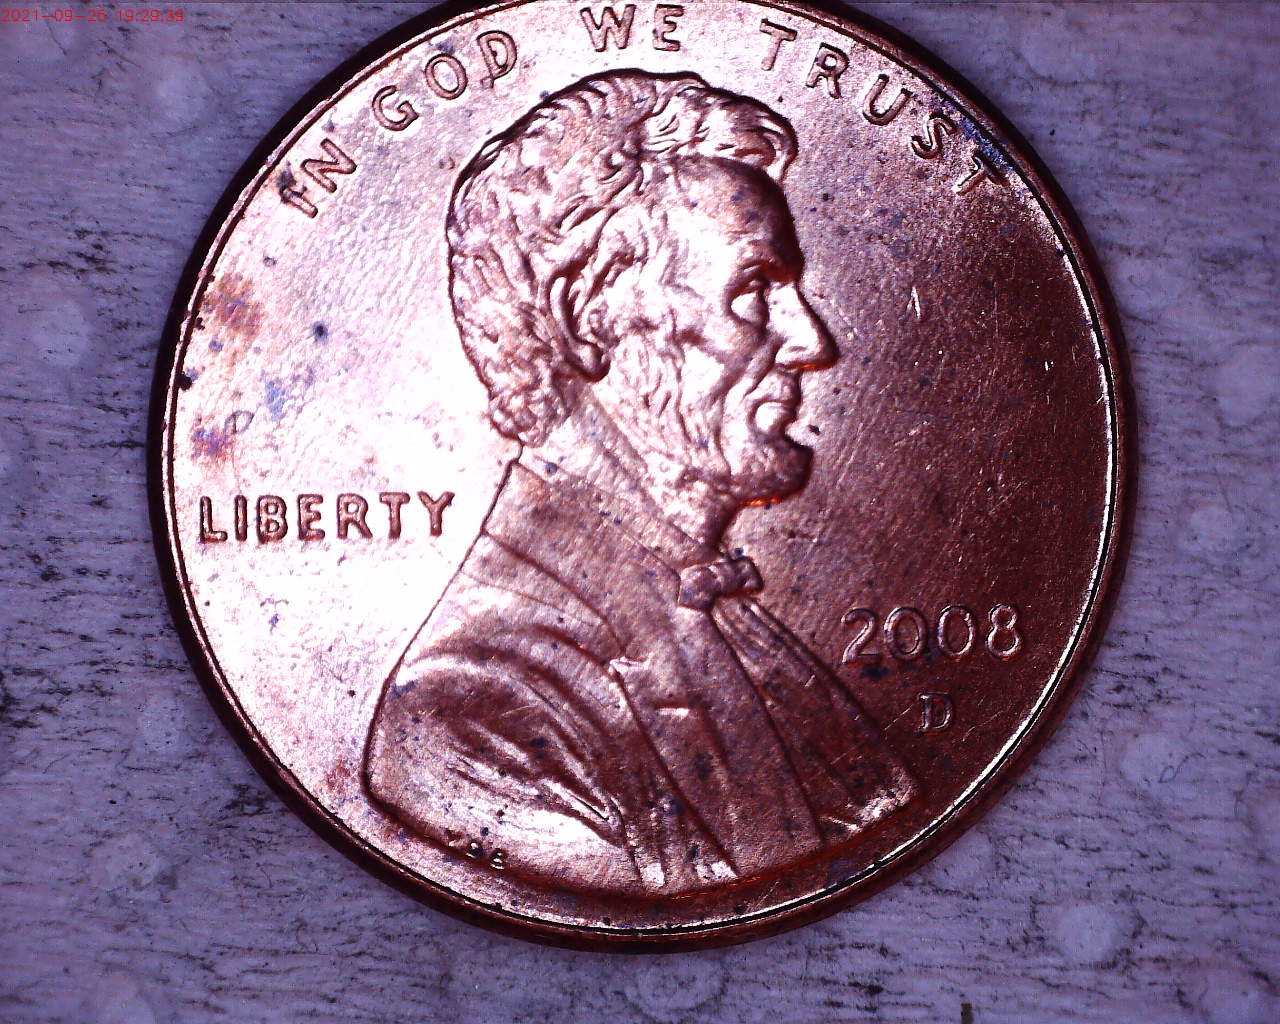 2008 D penny front.jpg